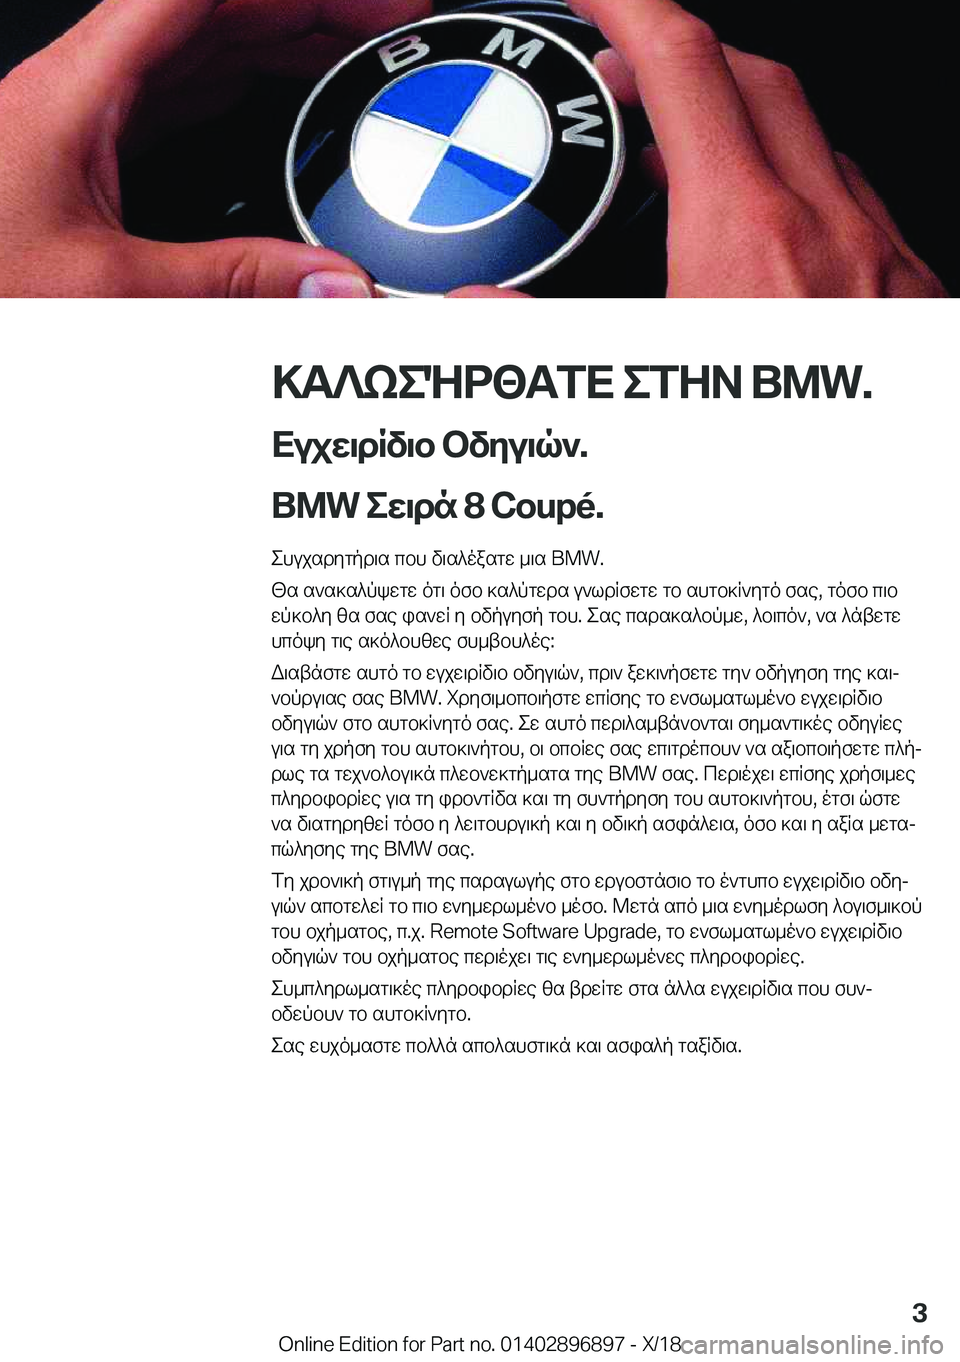 BMW 8 SERIES COUPE 2019  ΟΔΗΓΌΣ ΧΡΉΣΗΣ (in Greek) >T?keNd<TfX�efZA��B�M�W�.
Xujw\dRv\b�bvyu\q`�.
�B�M�W�ew\dn��8��C�o�u�p�